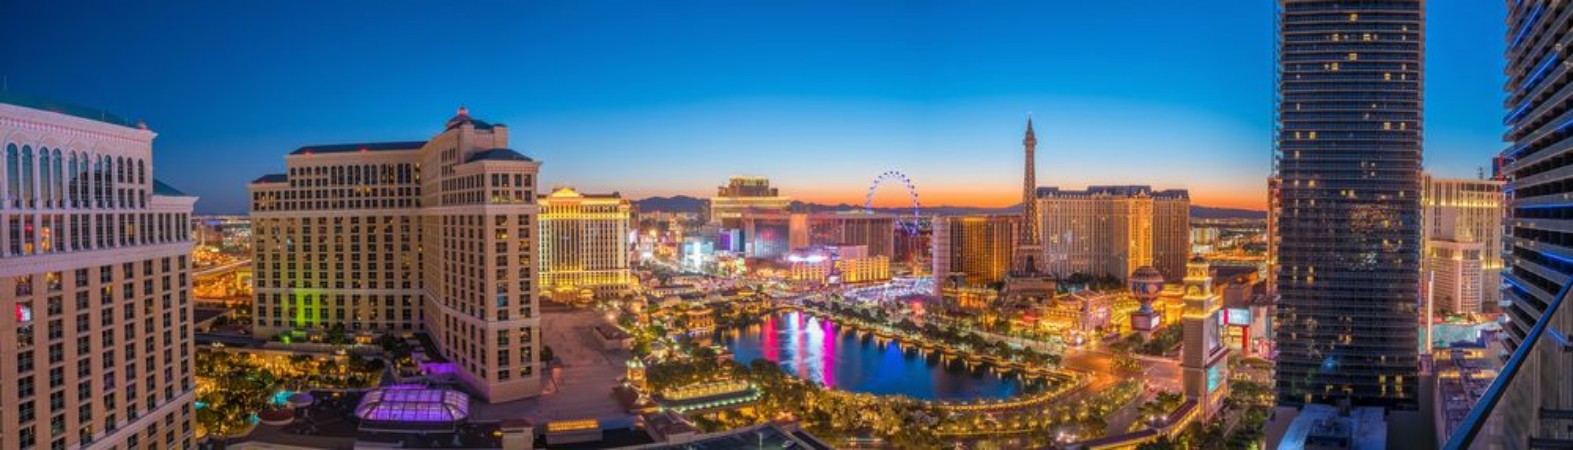 Image de Aerial view of Las Vegas strip